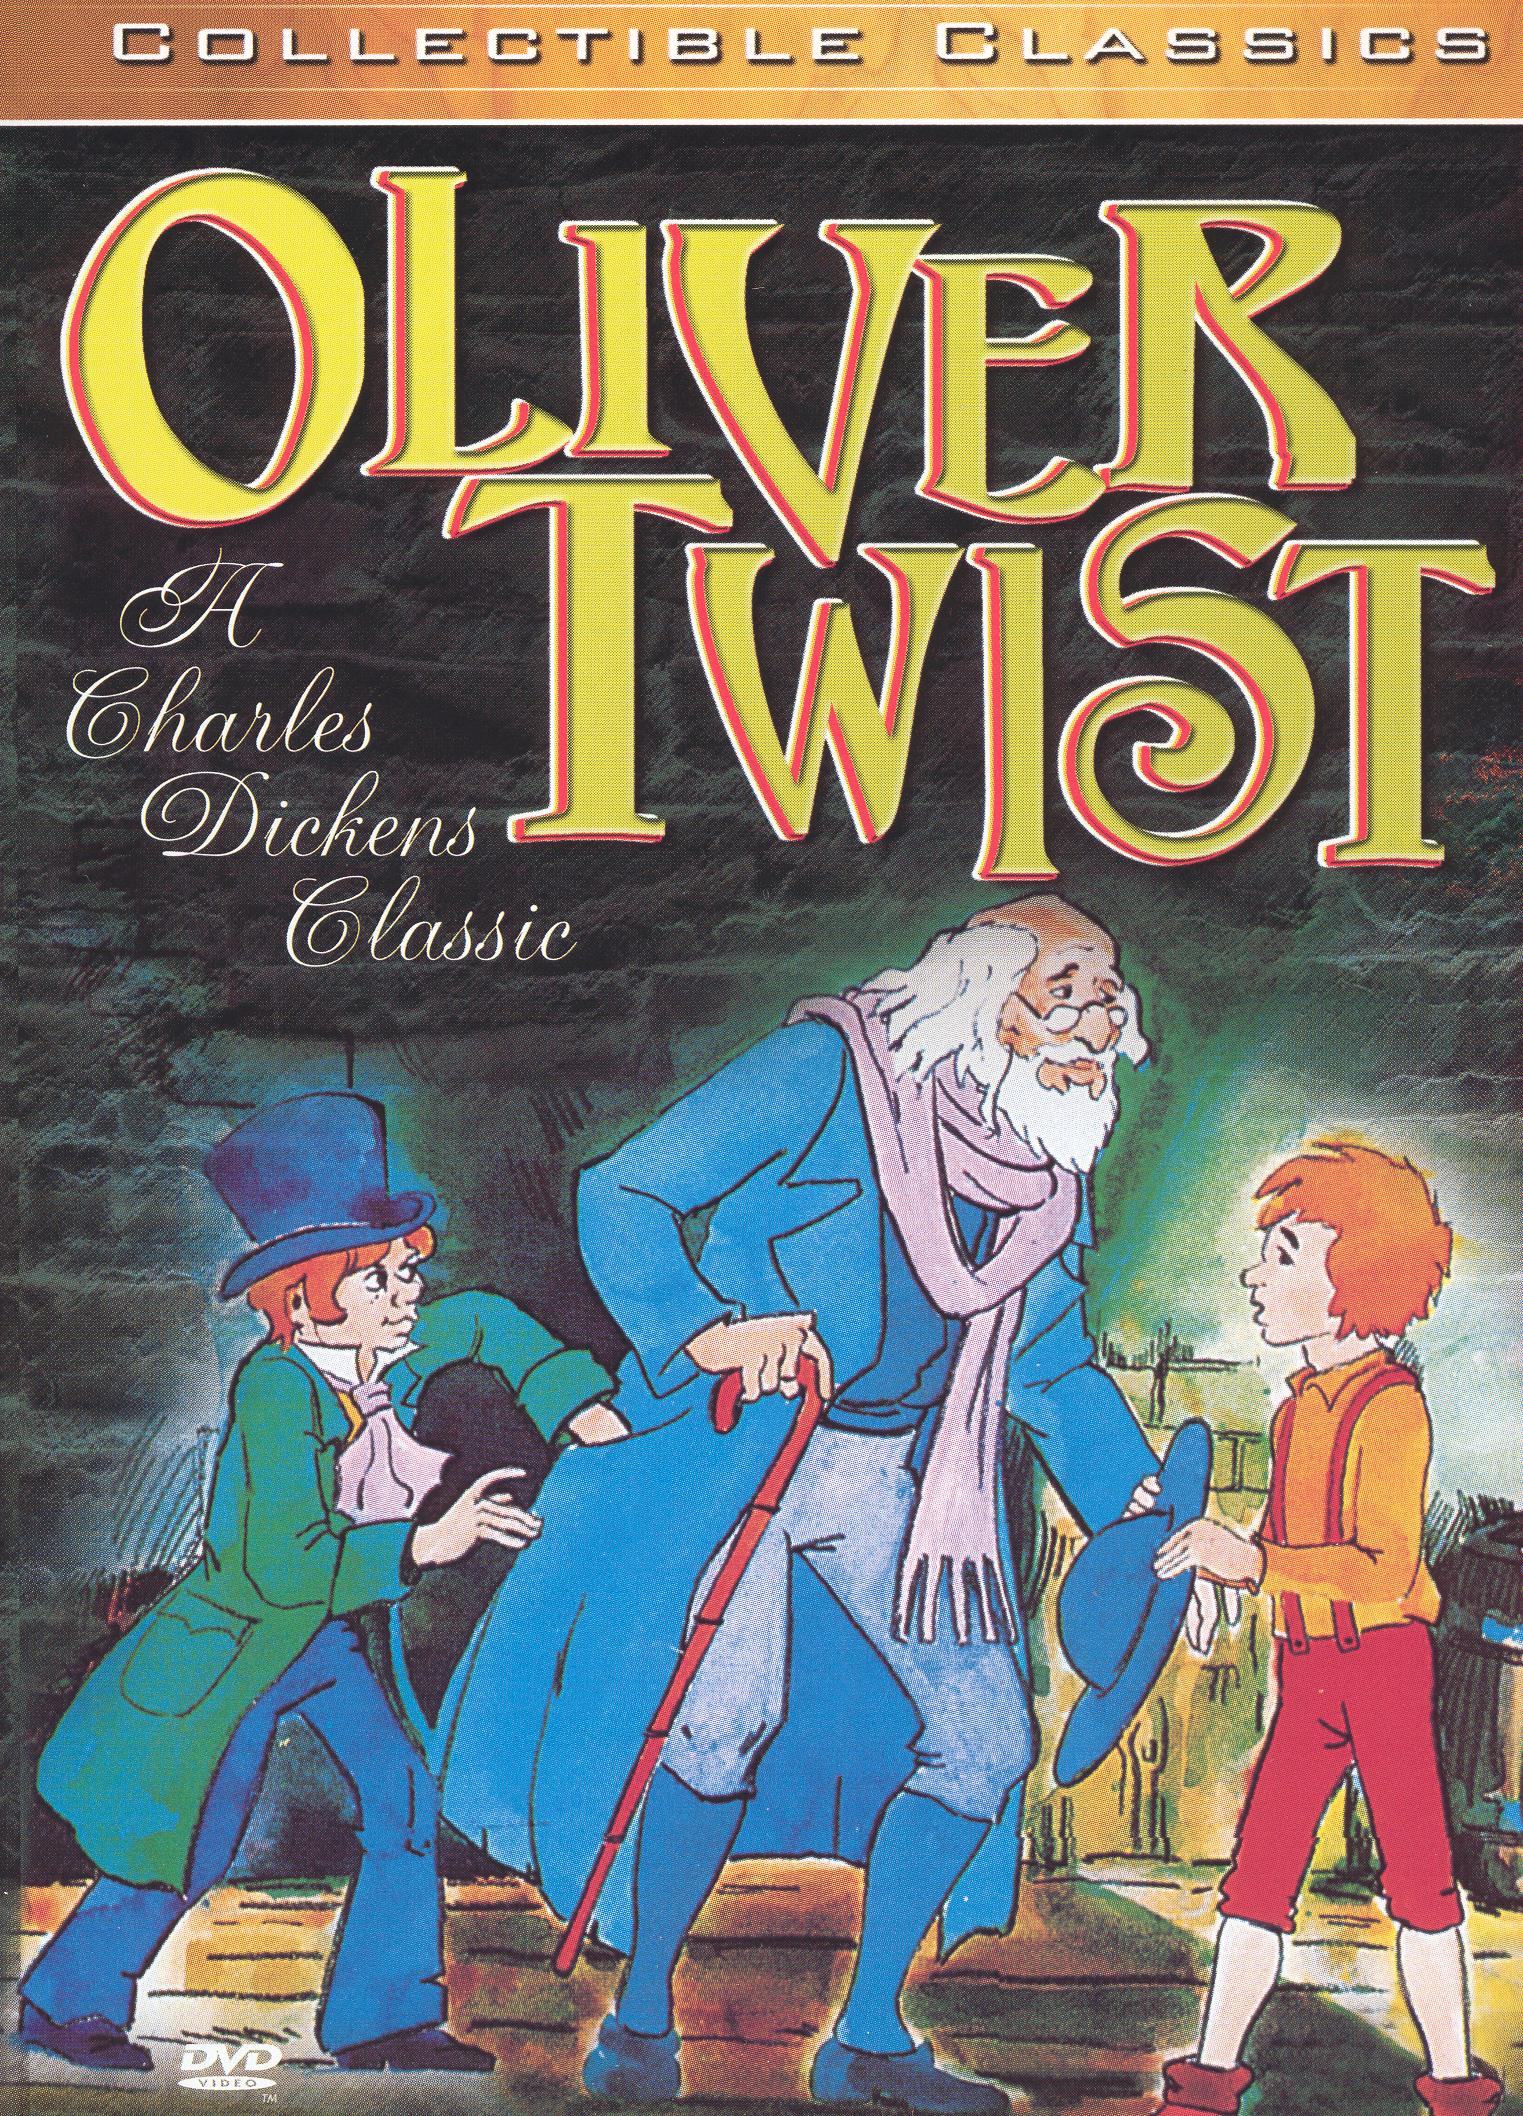 the wonderful world of disney oliver twist 1997